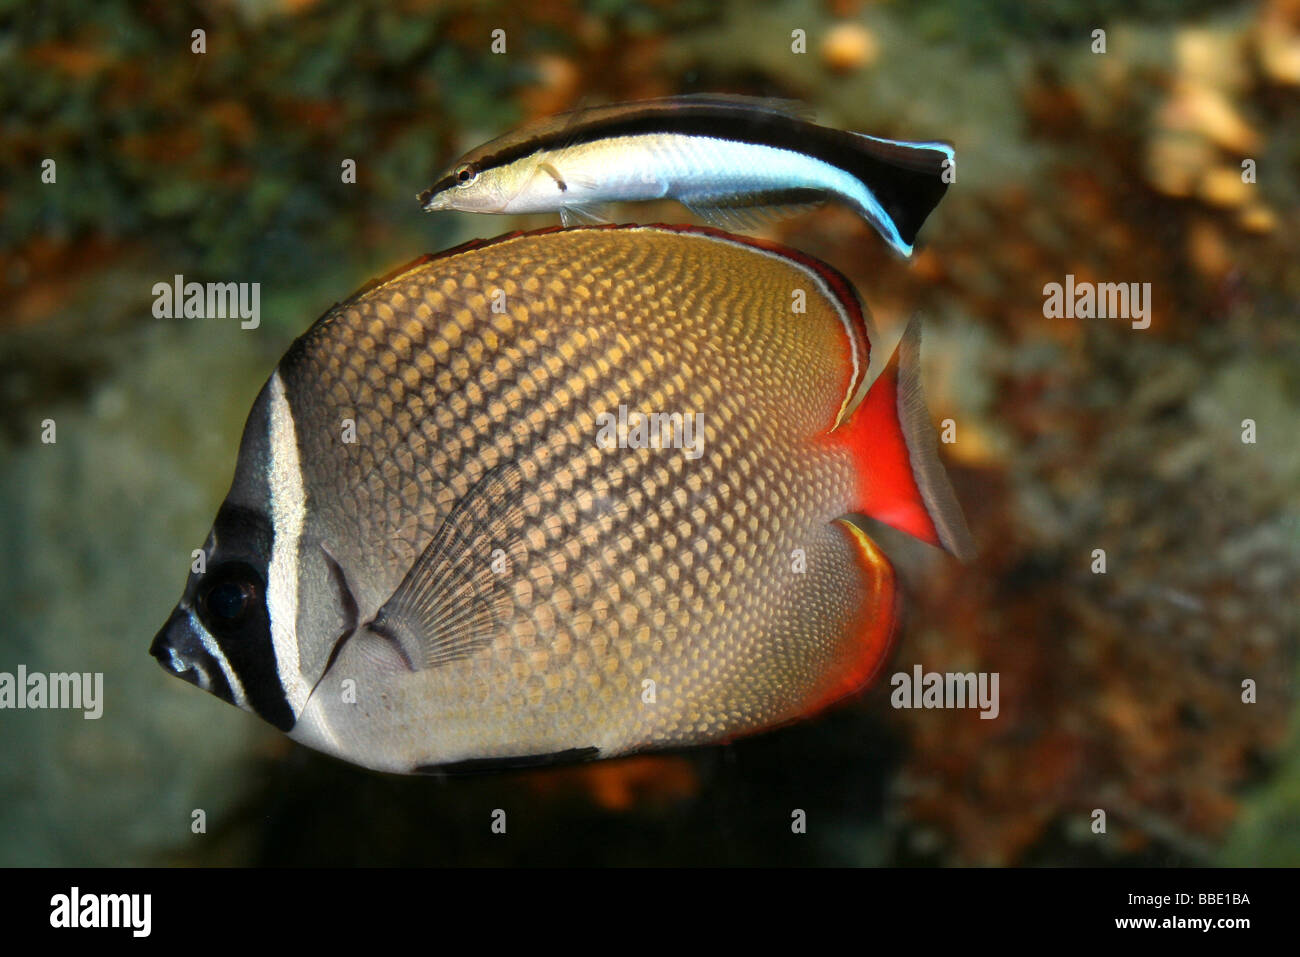 Pez mariposa de cola roja fotografías e imágenes de alta resolución - Alamy